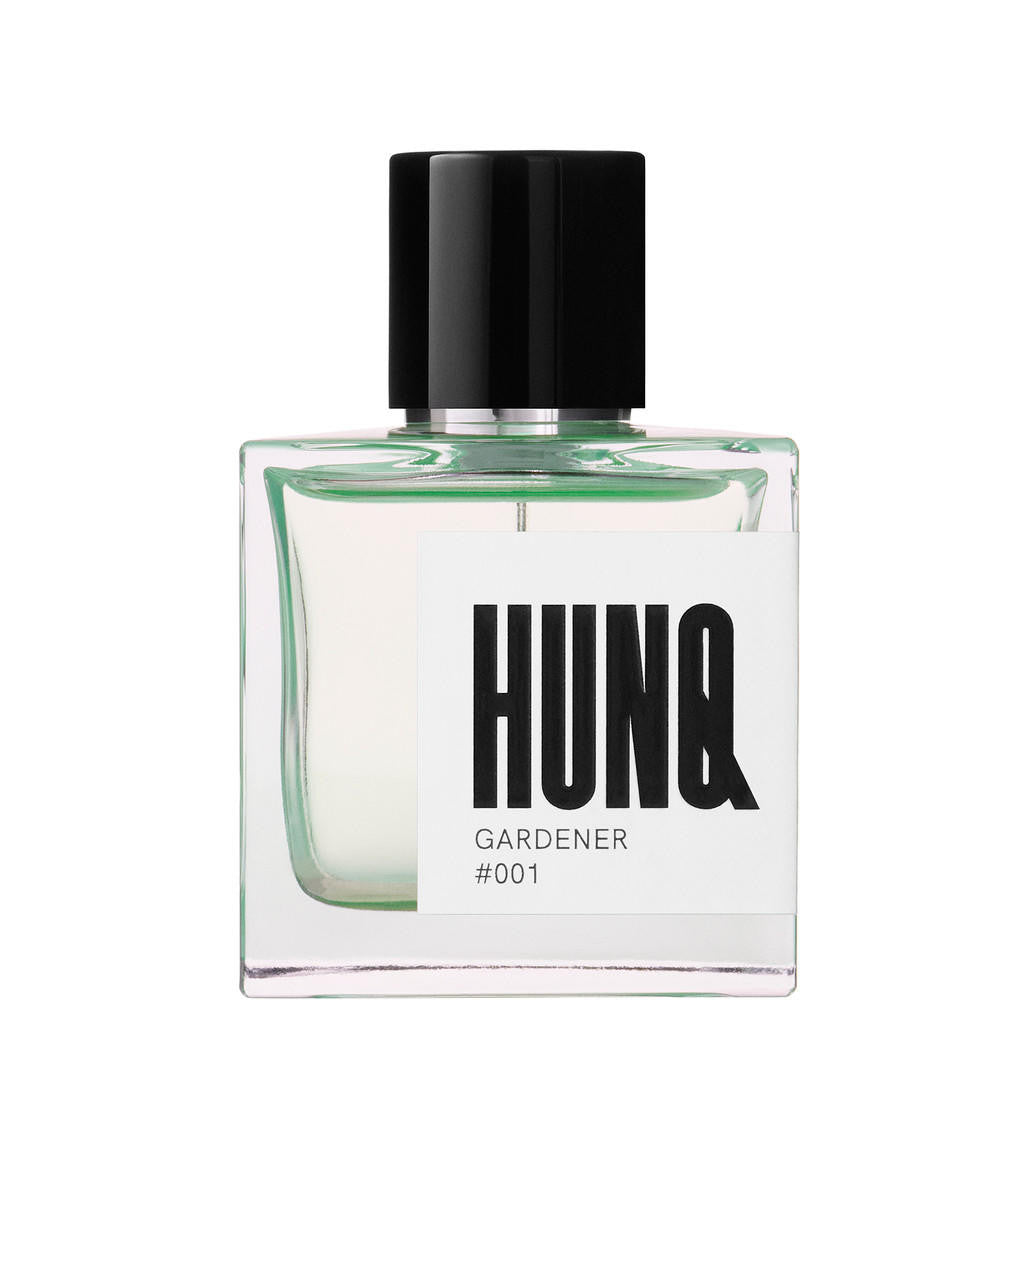  HUNQ #001 Gardener Eau de Parfum 